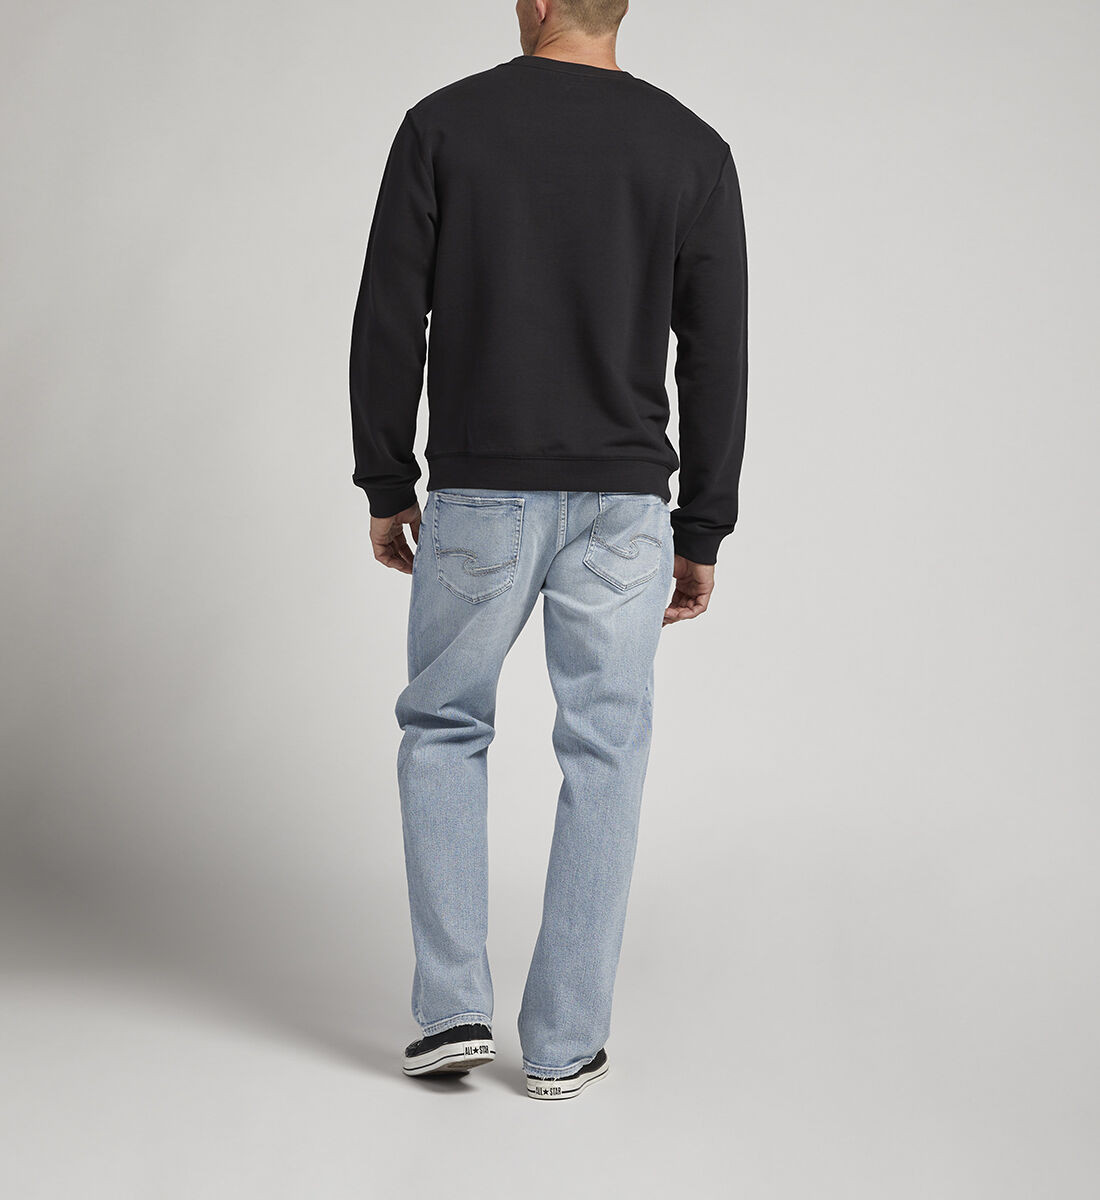 Buy Mens Crewneck Sweatshirt for USD 48.00 | Silver Jeans US New